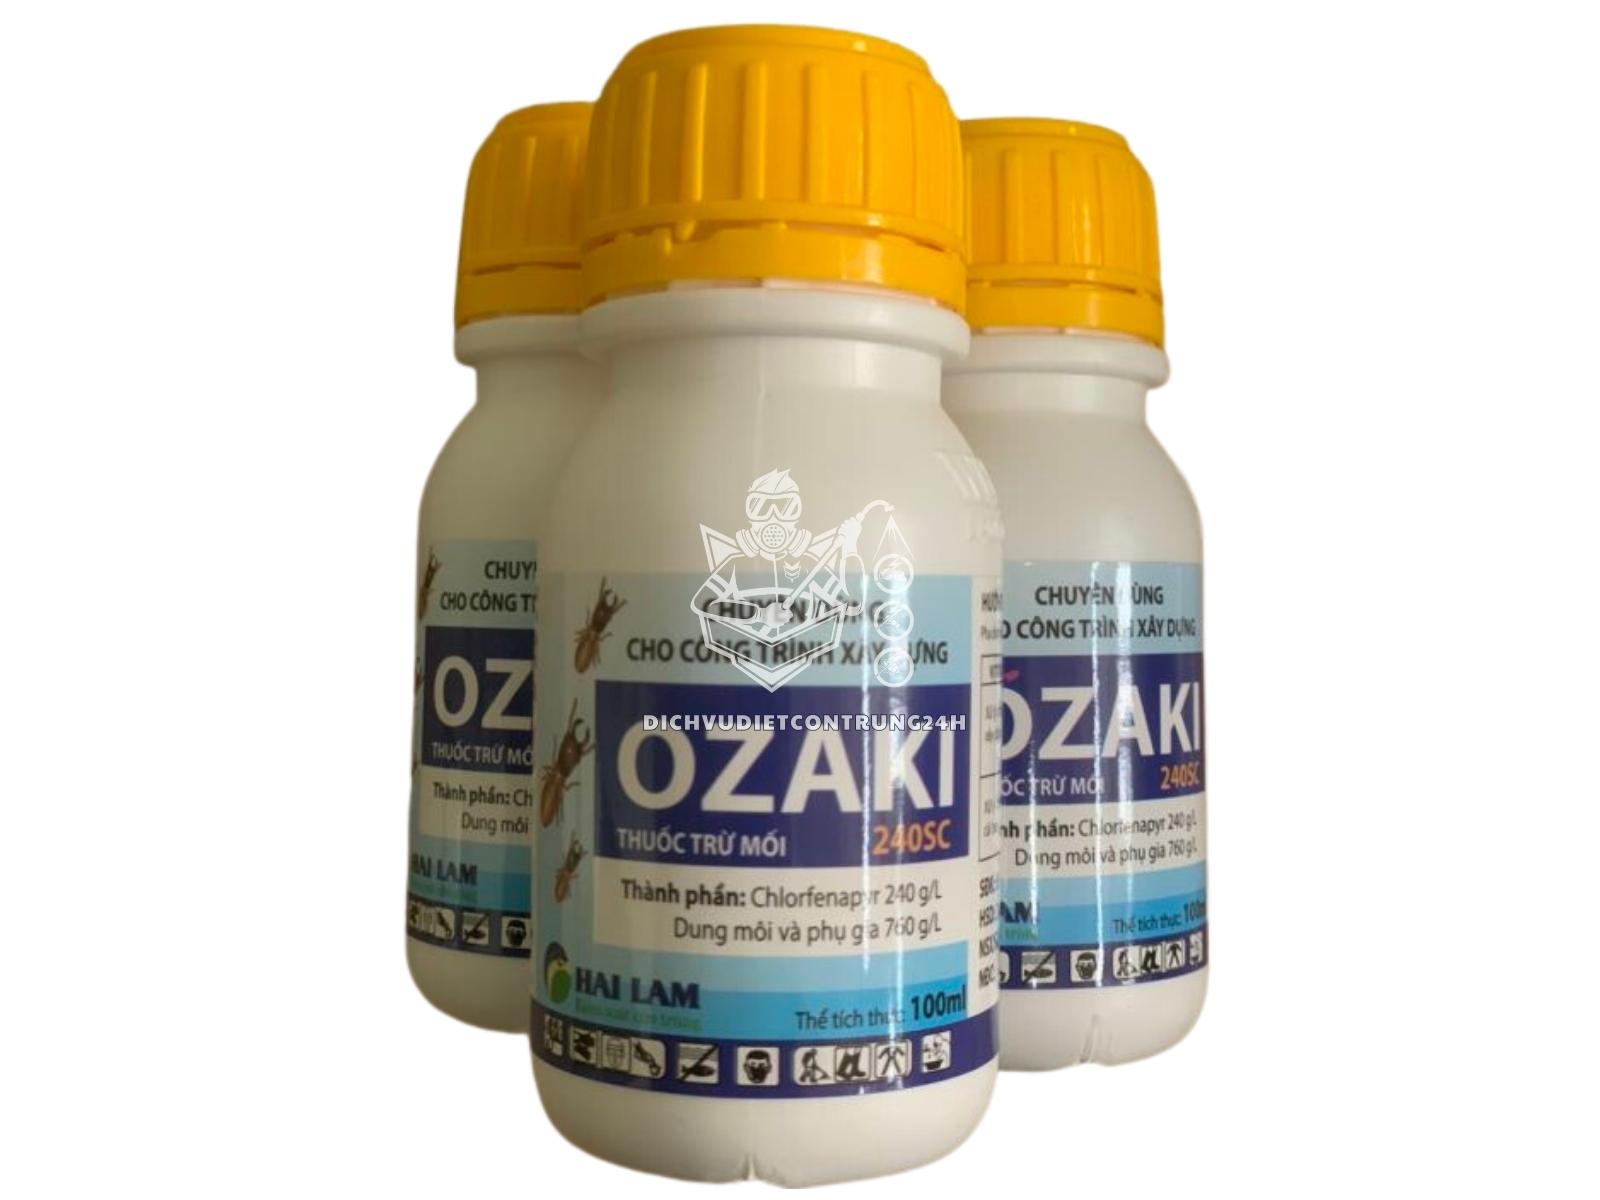 OZAKI 240SC